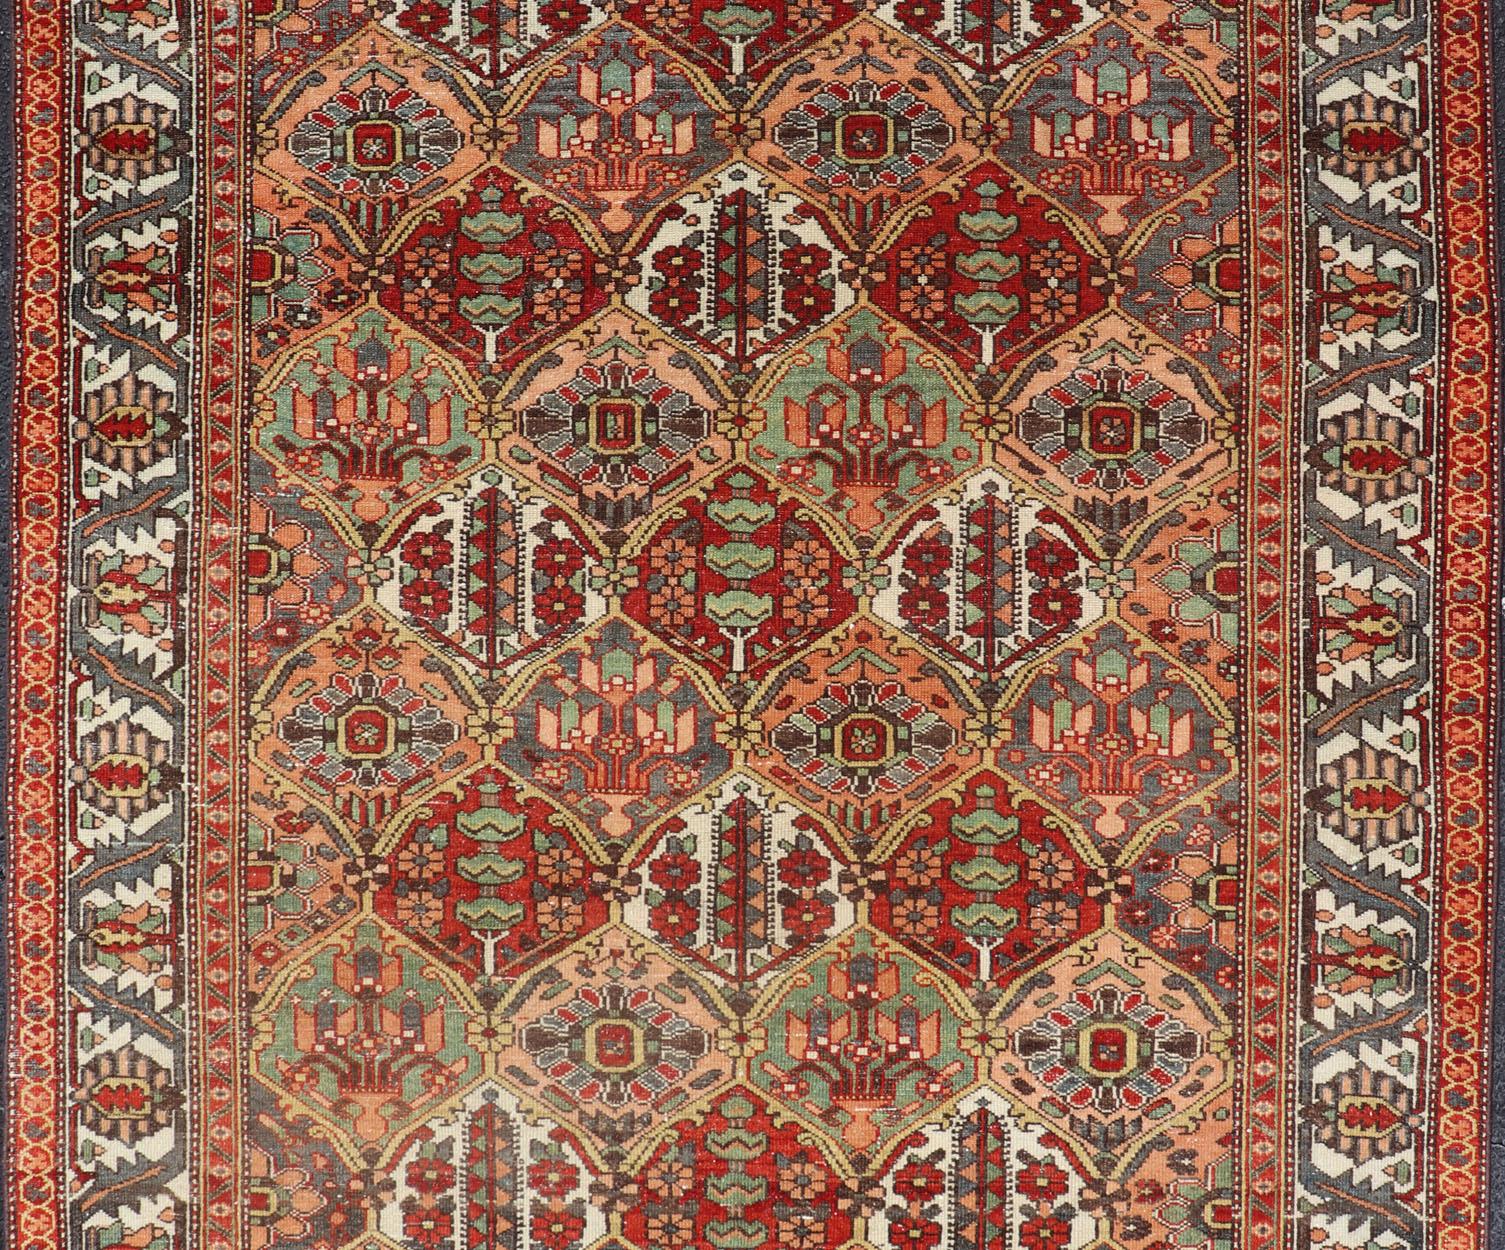 Antique Persian Diamond Garden Design Bakhtiari Rug in Multi Colors For Sale 1